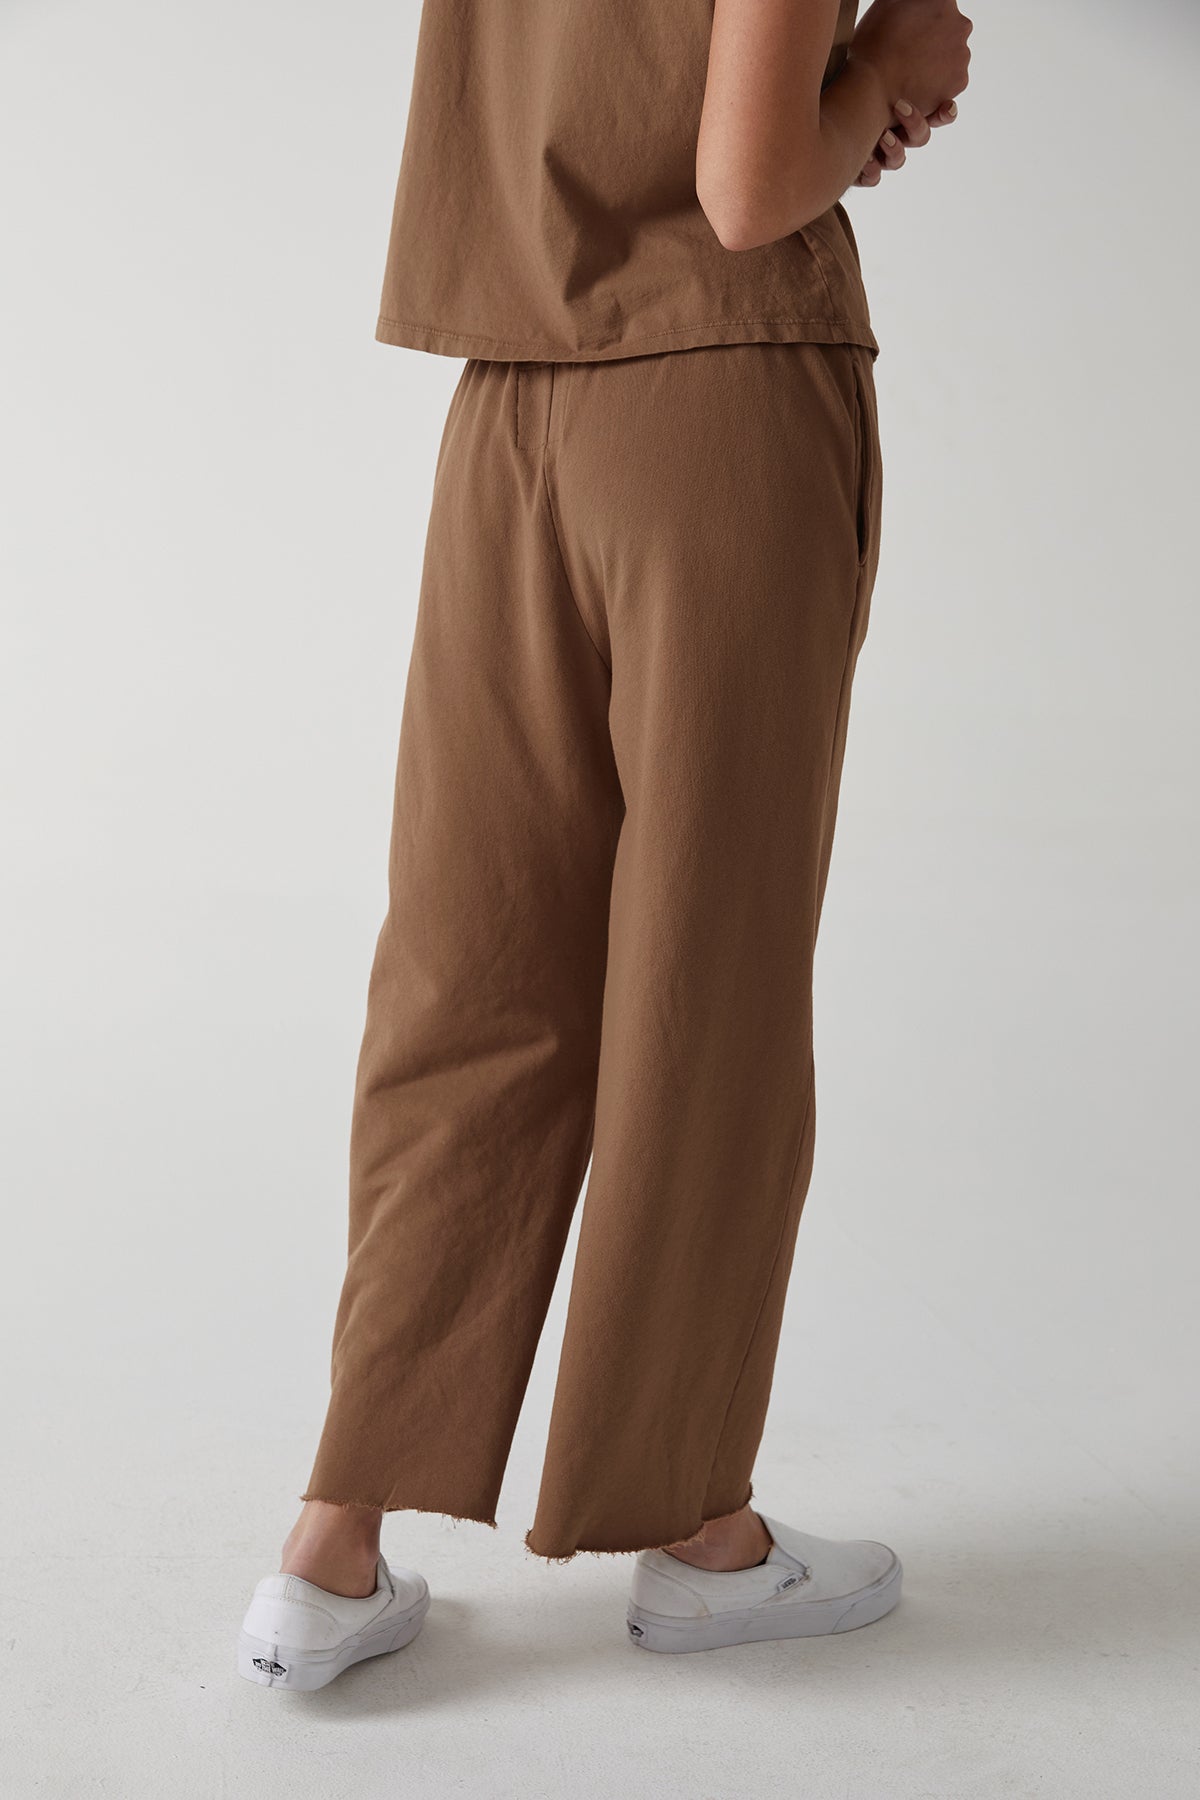 Montecito Sweatpant in hazelnut brown back-25338380320961